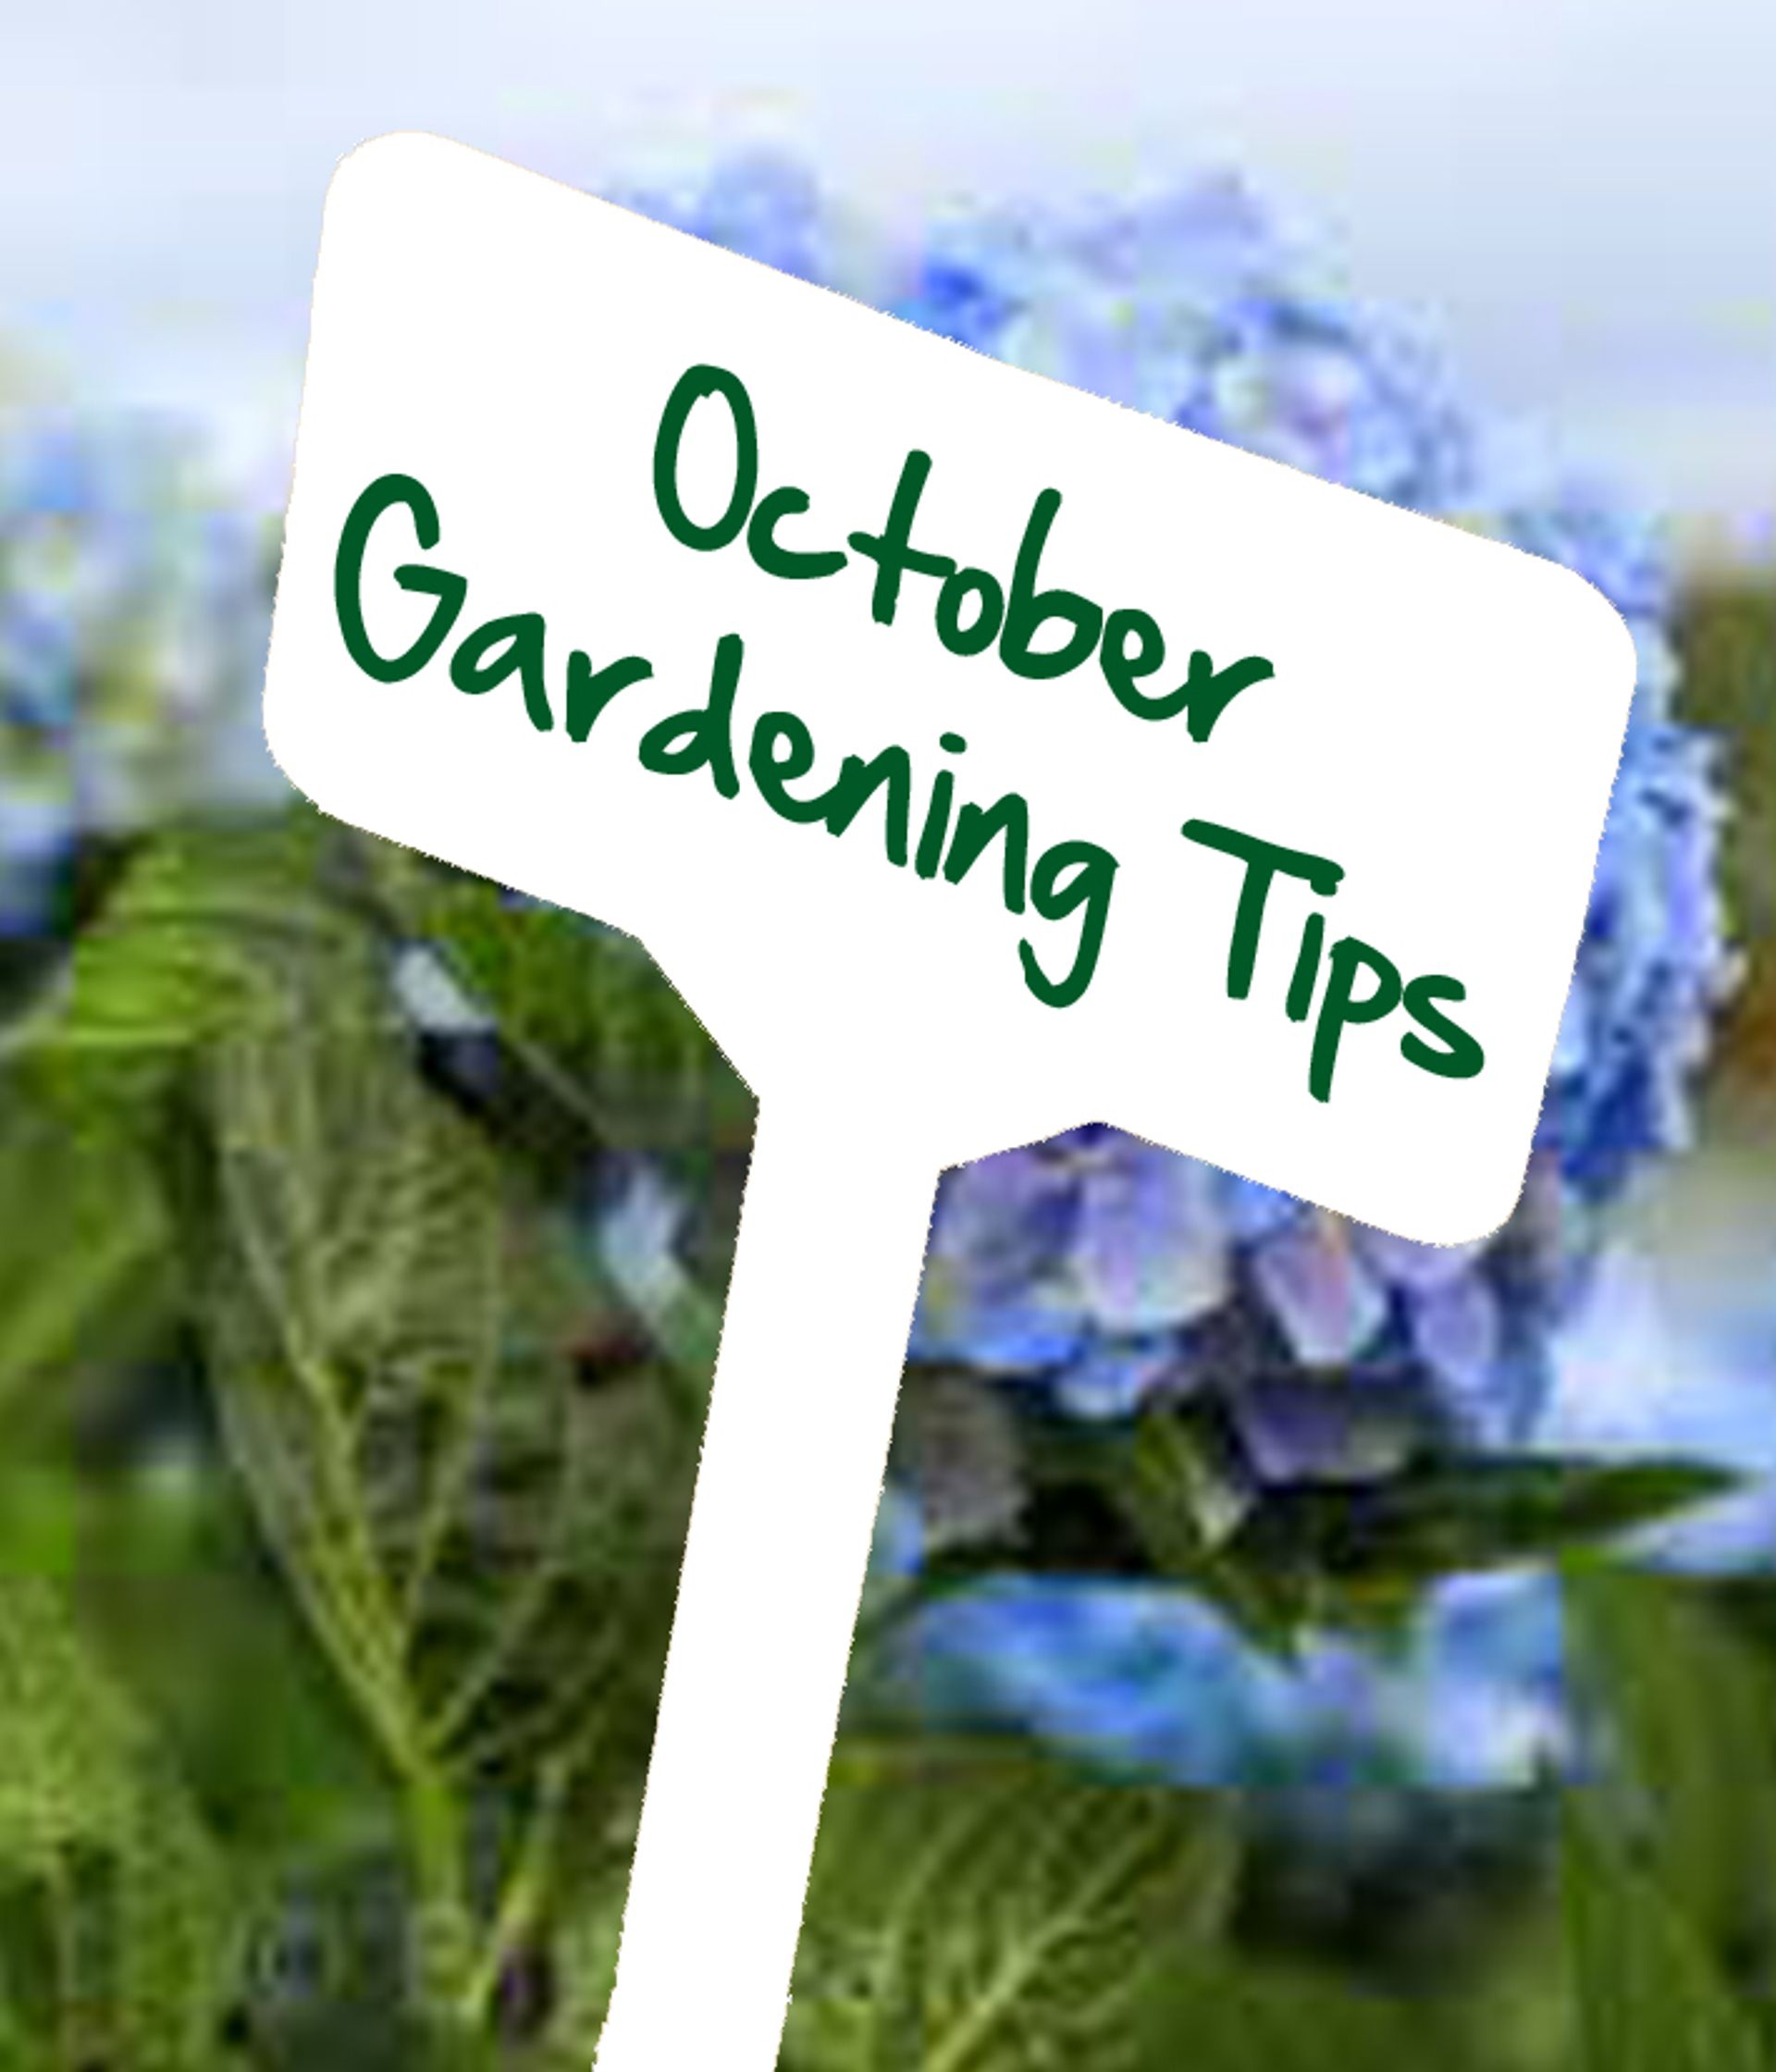 October Gardening Tips by Reg Moule